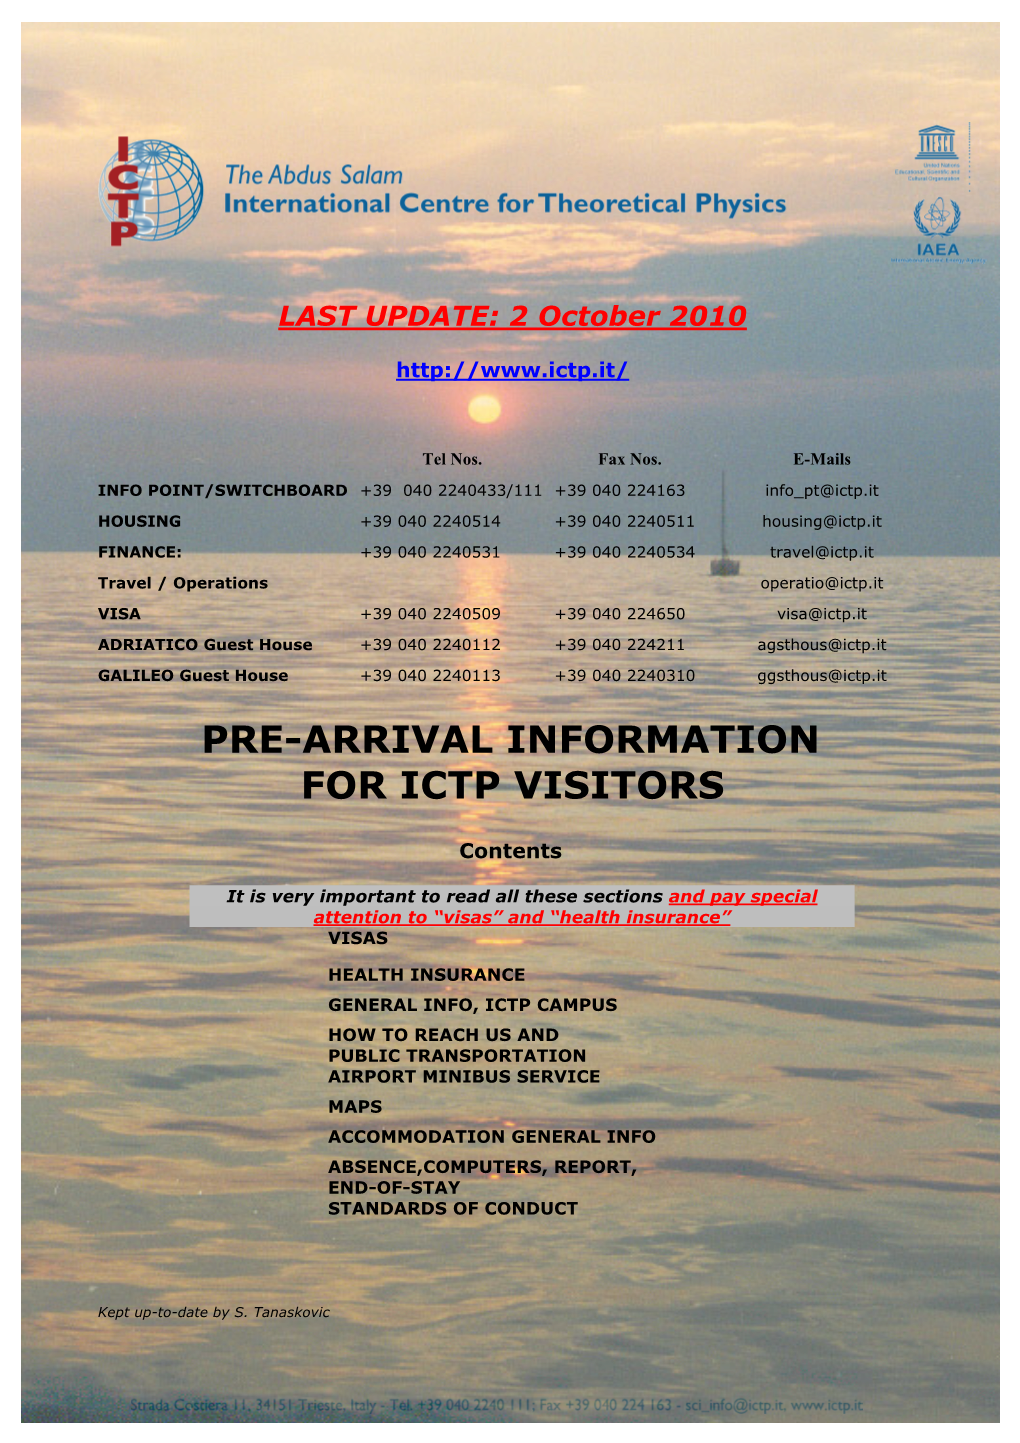 Pre-Arrival Information for Ictp Visitors